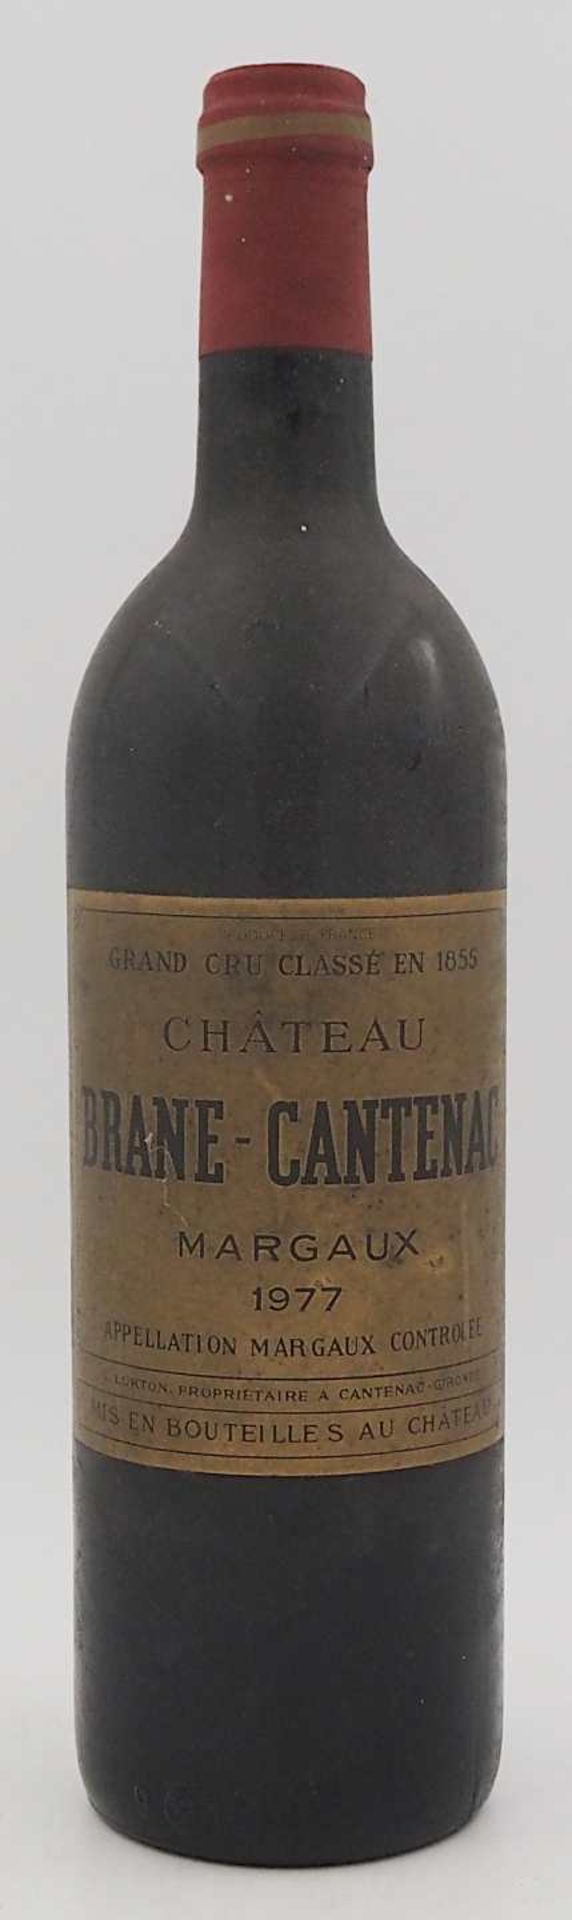 1 Flasche Chateau Brane-Cantenac Margaux 1977 Füllstand base neck, Kapsel intakt, Eti